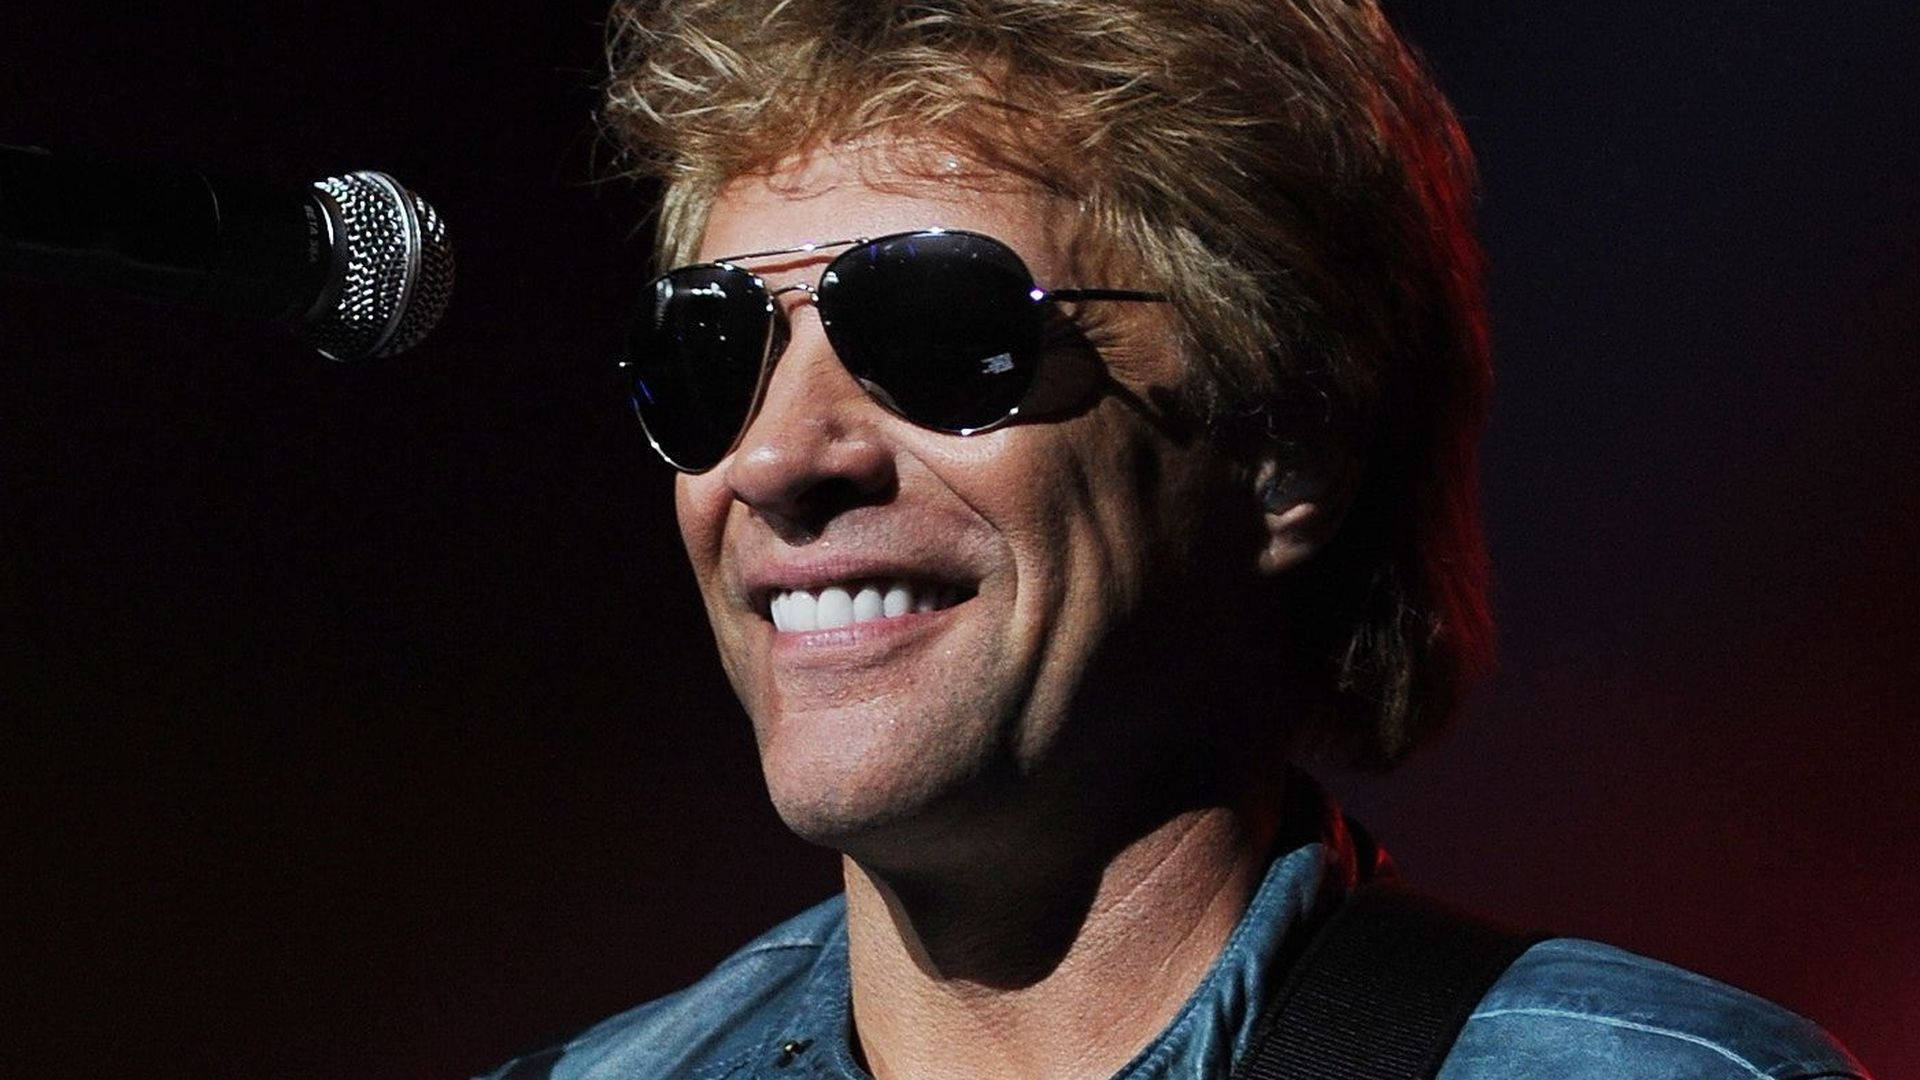 Jon Bon Jovi With Shades Live Concert Wallpaper